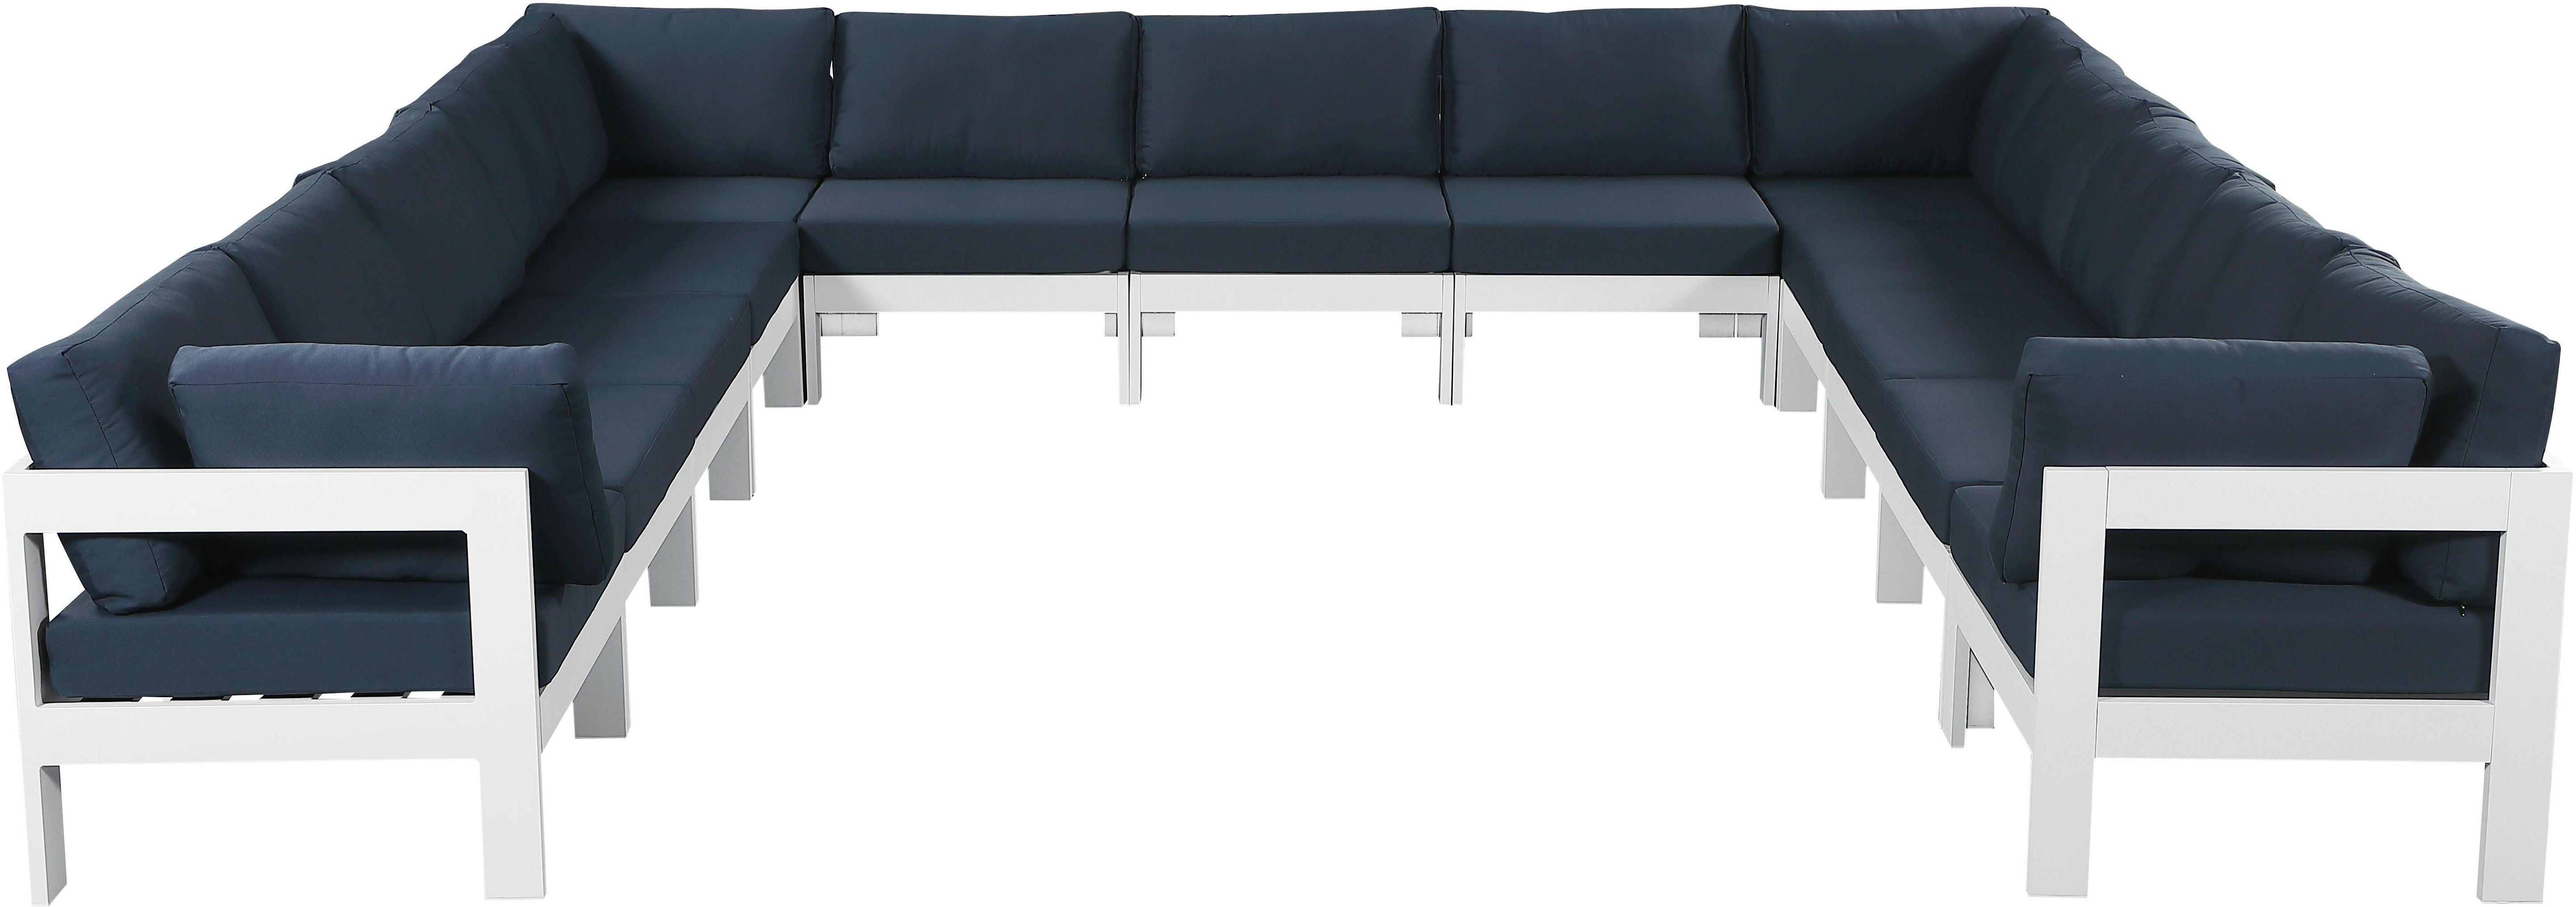 Meridian Furniture - Nizuc - Outdoor Patio Modular Sectional 13 Piece - Navy - 5th Avenue Furniture